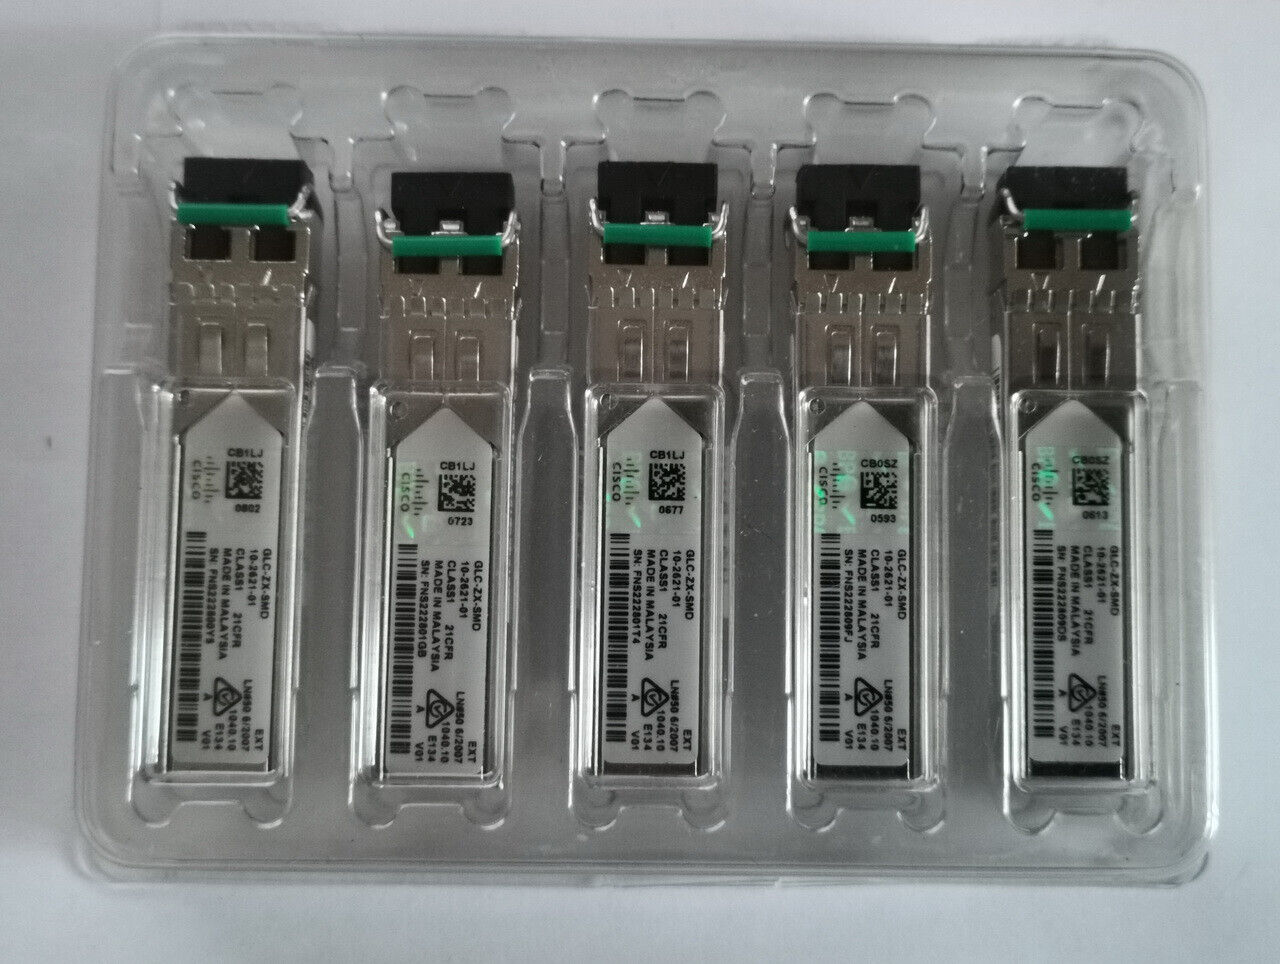 GLC-ZX-SMD Cisco SFP 1000Base-ZX 70km 5-pcs pack NEW genuine Transceiver modules